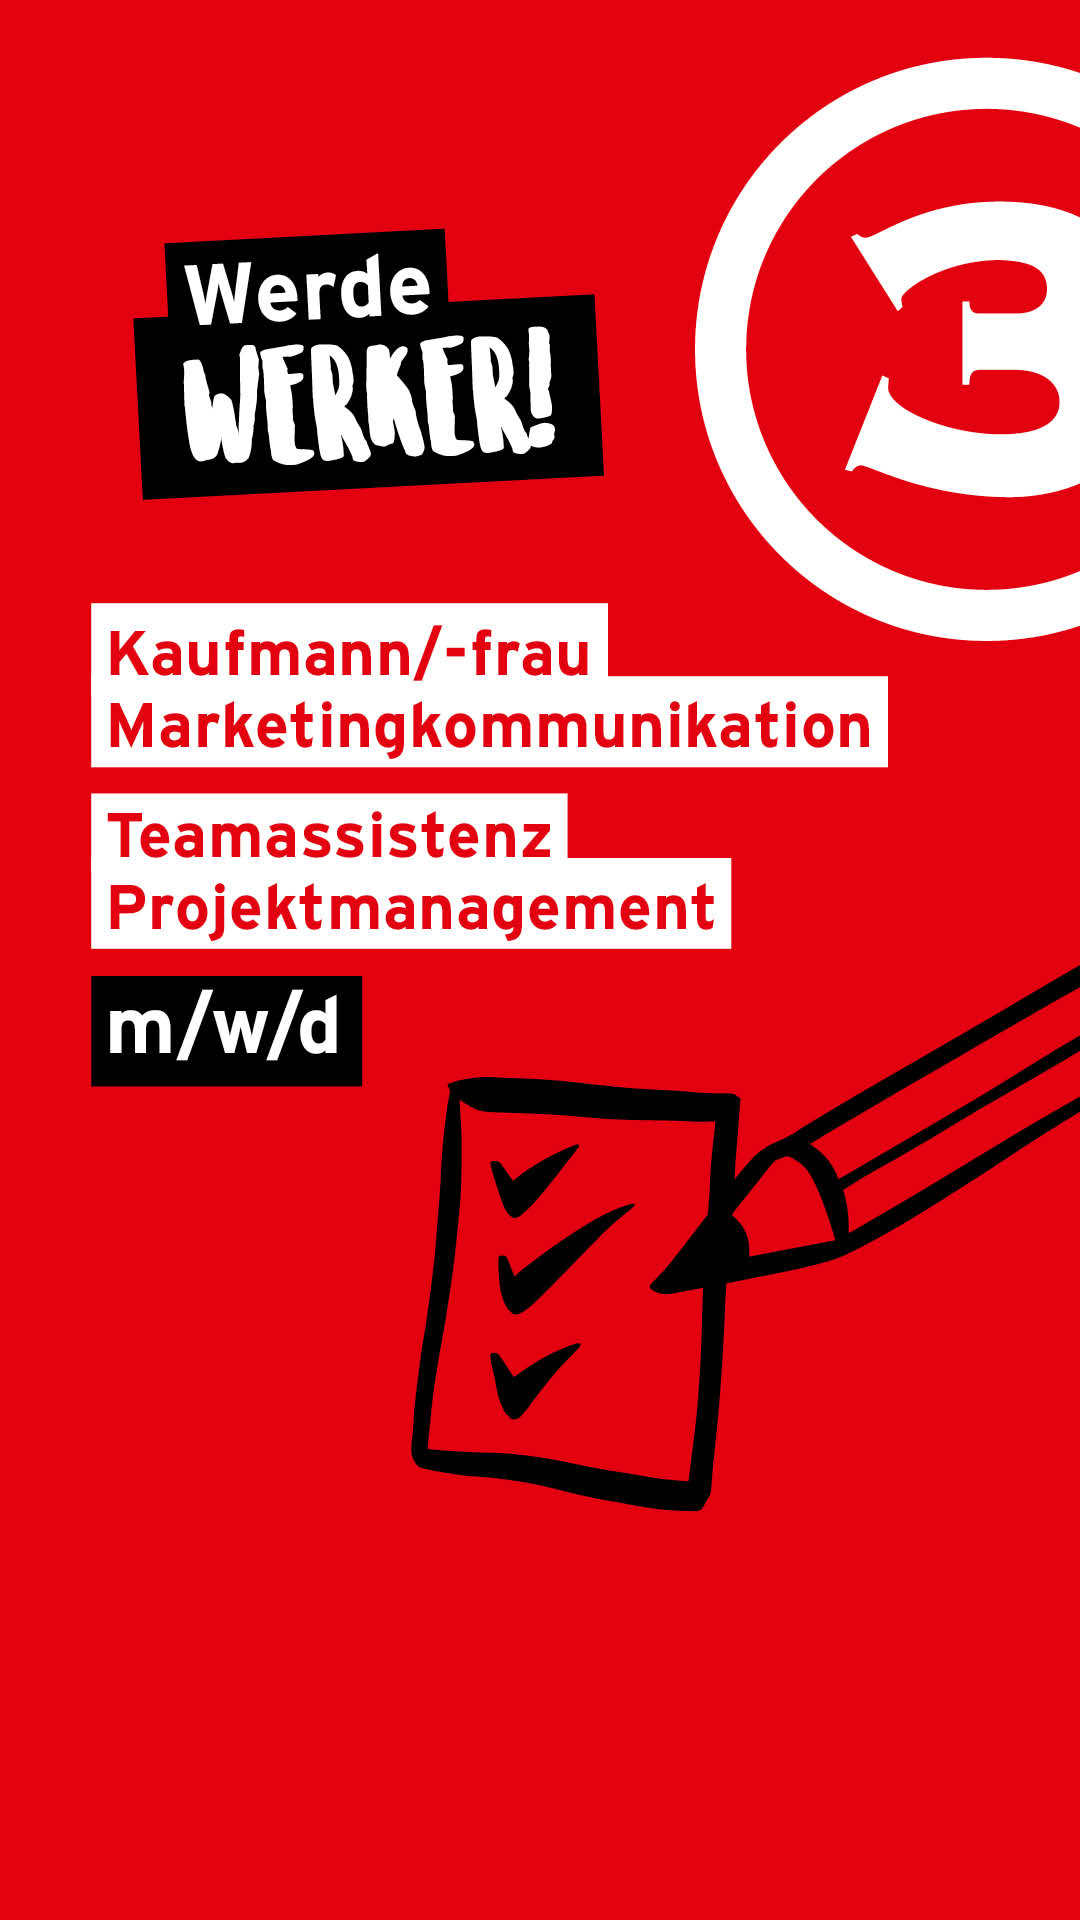 Kaufmann/-frau Marketingkommunikation